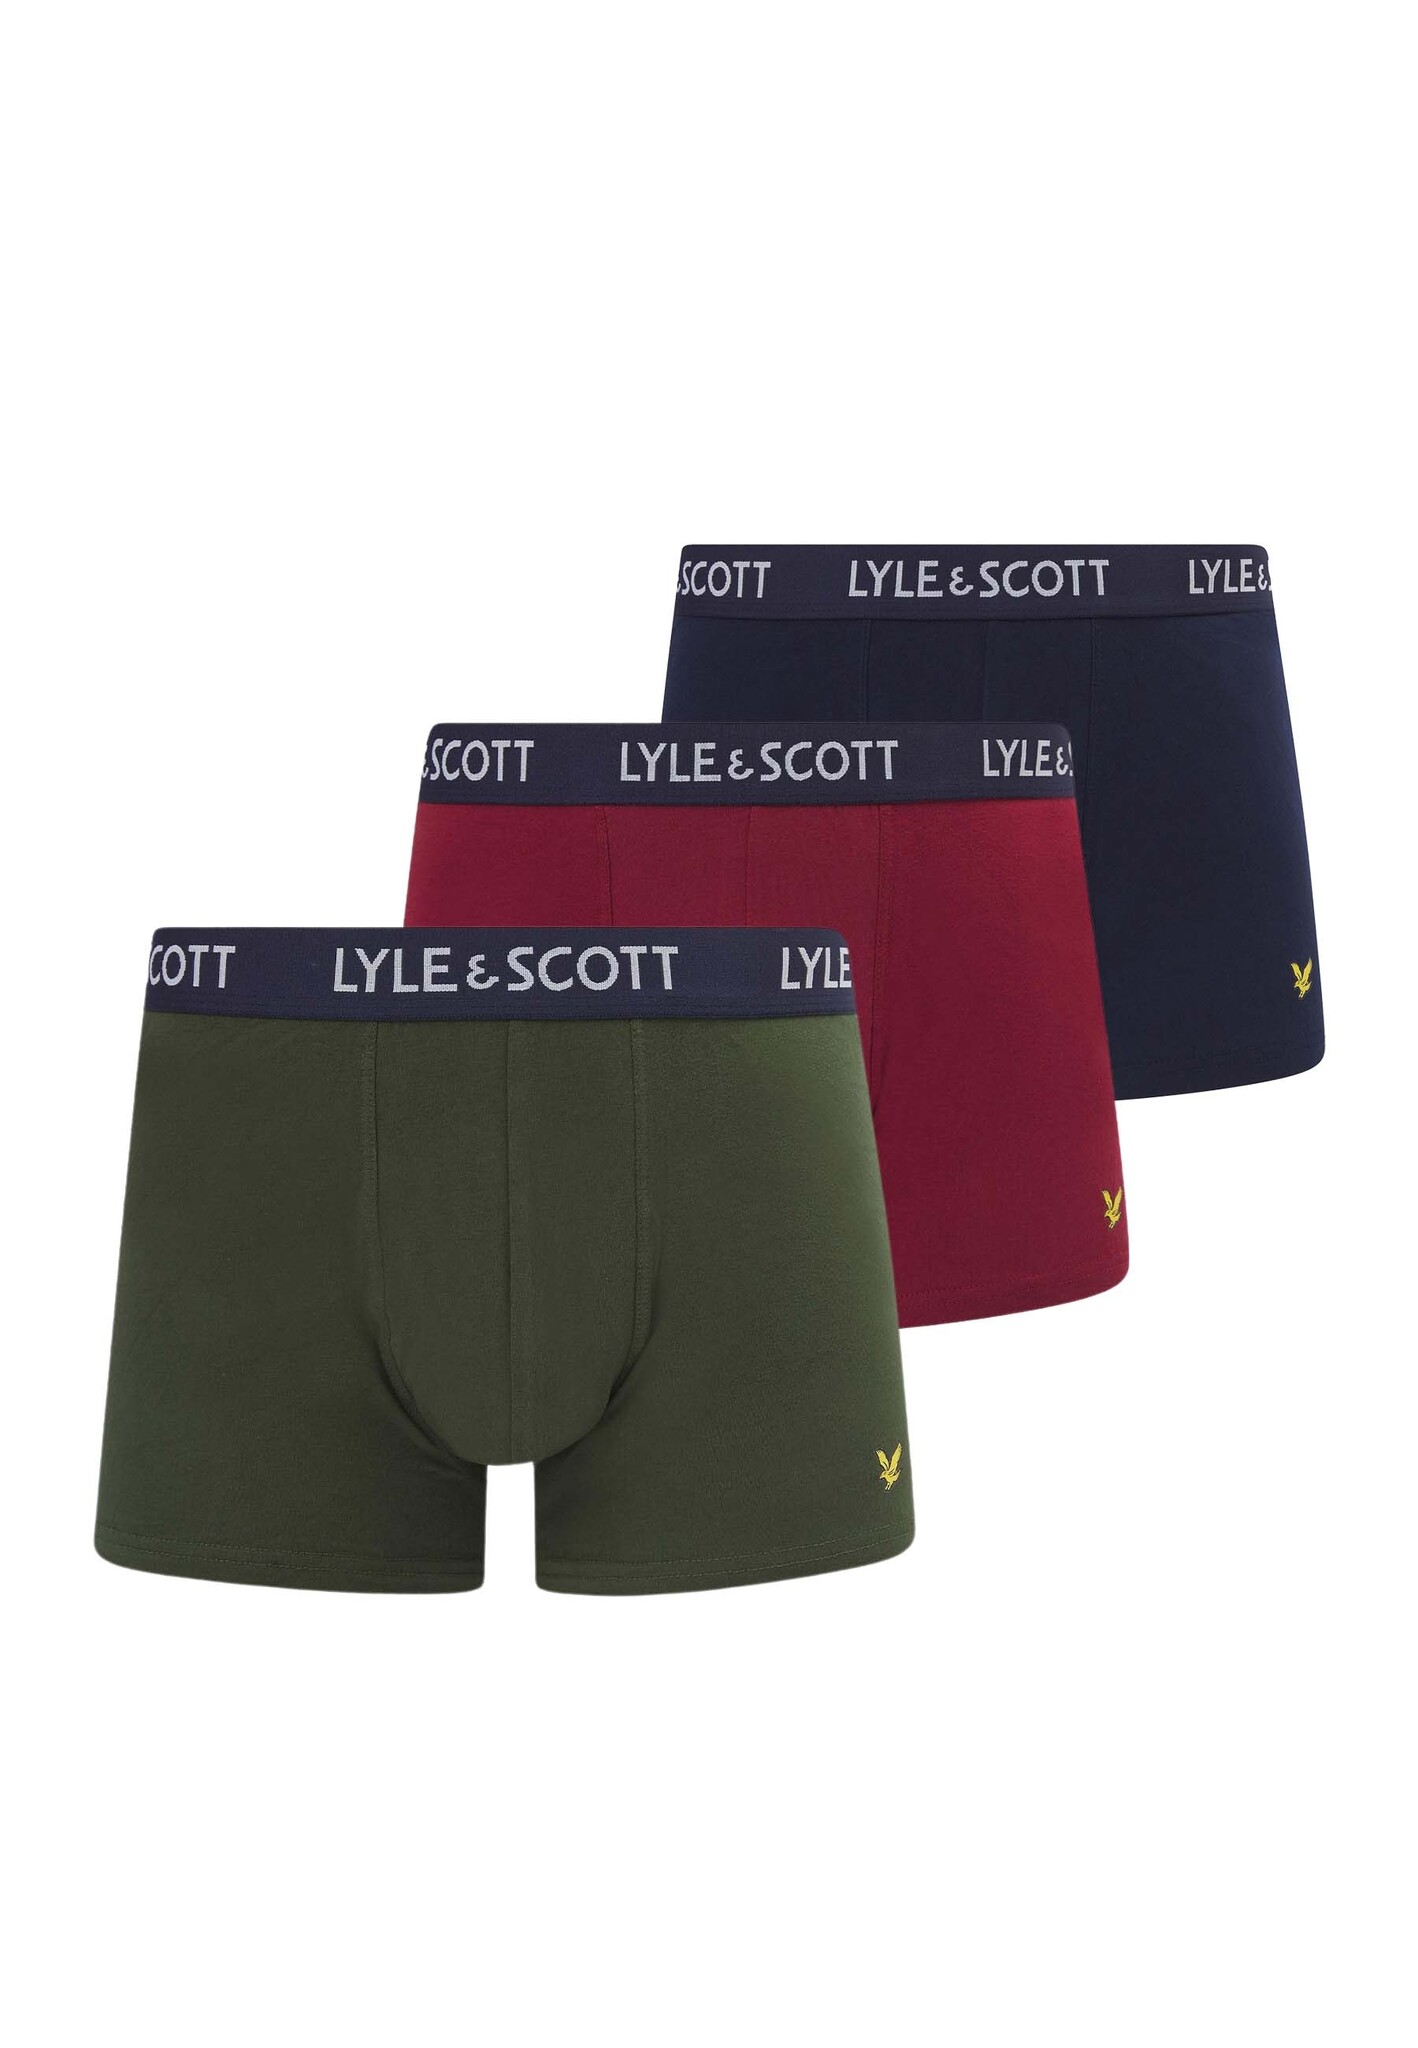 Lyle & Scott boxershorts multicolor Heren maat L